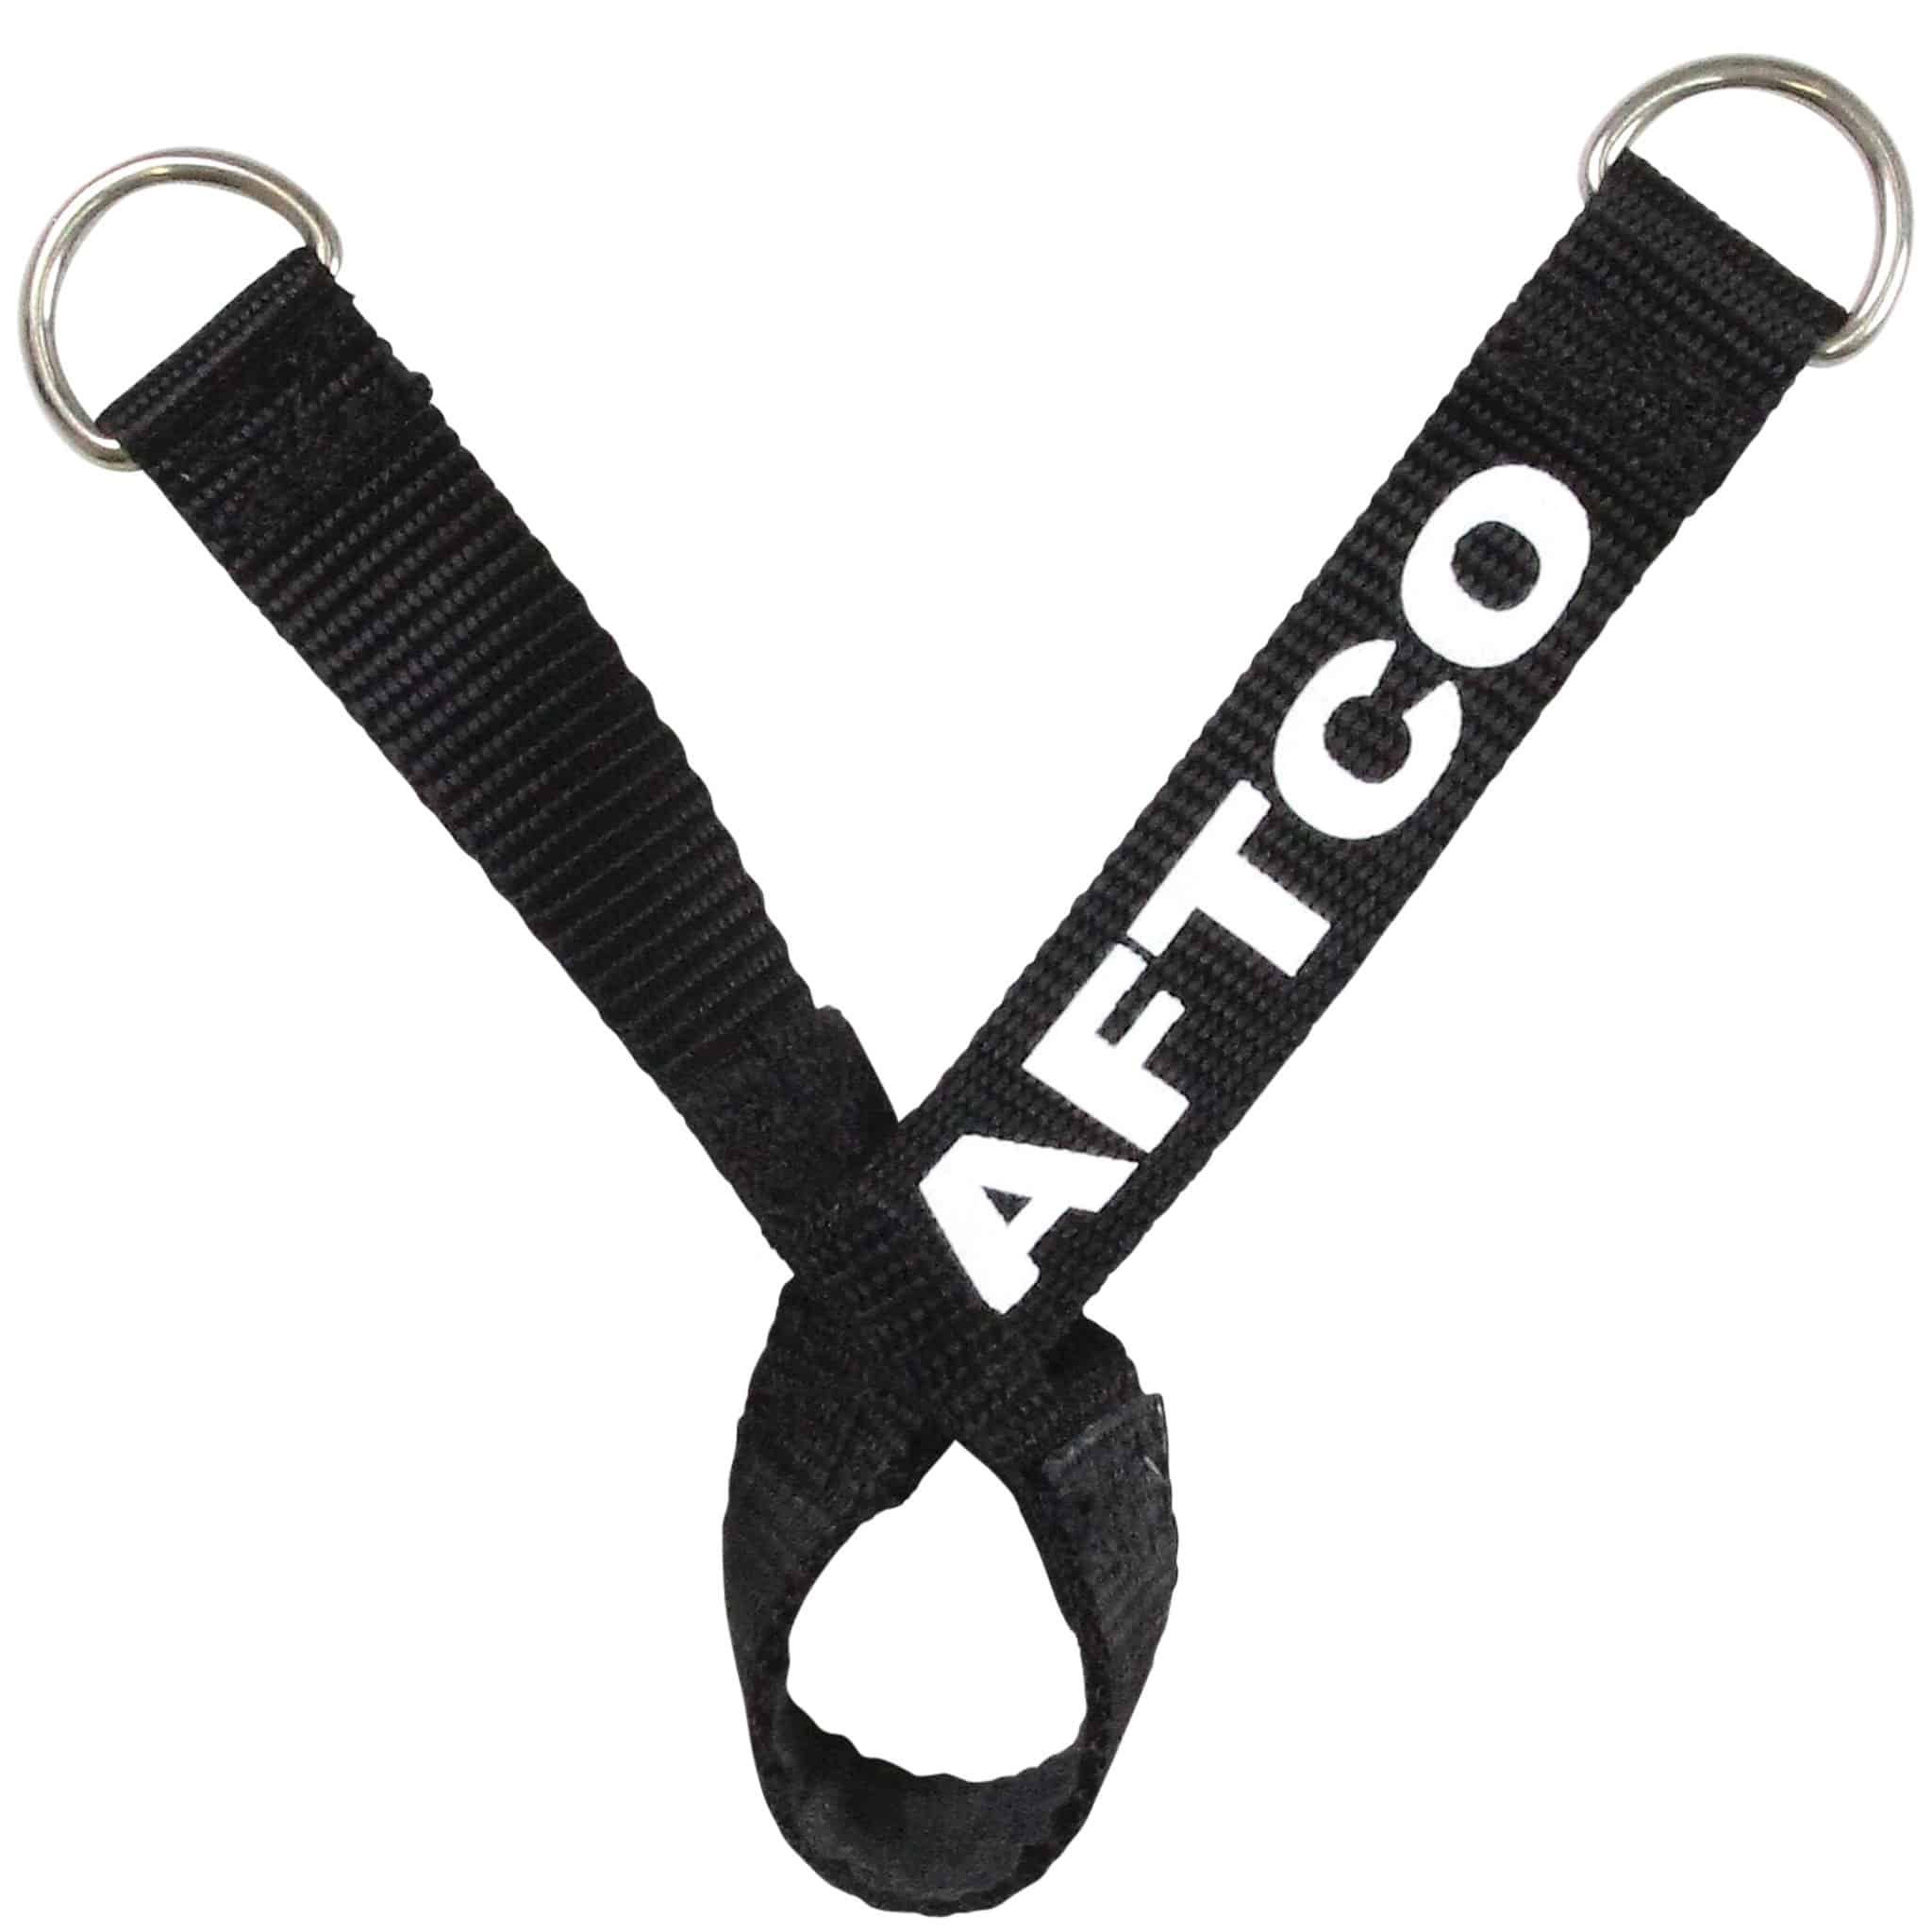 Braid Fighting Harness Safety Strap